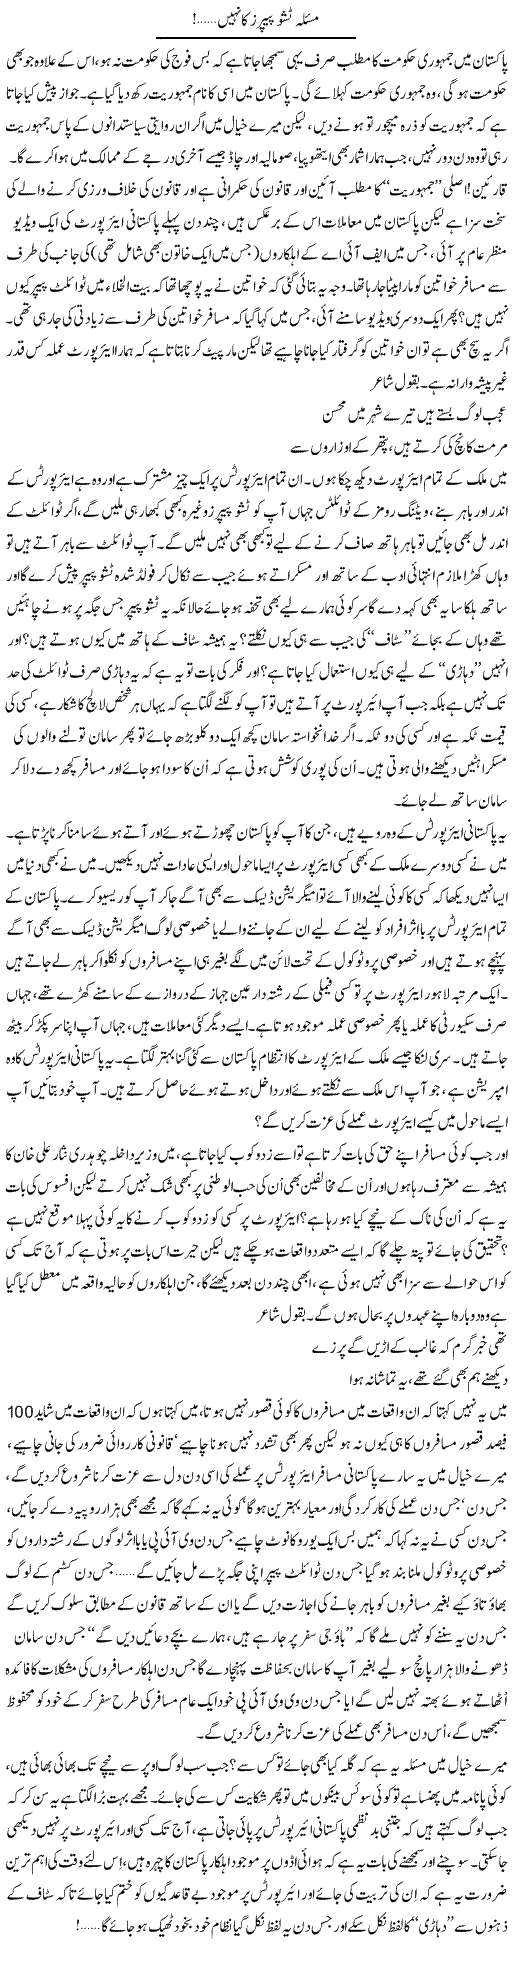 Masla Tissue Papers Ka Nahi | Ali Ahmad Dhillon | Daily Urdu Columns